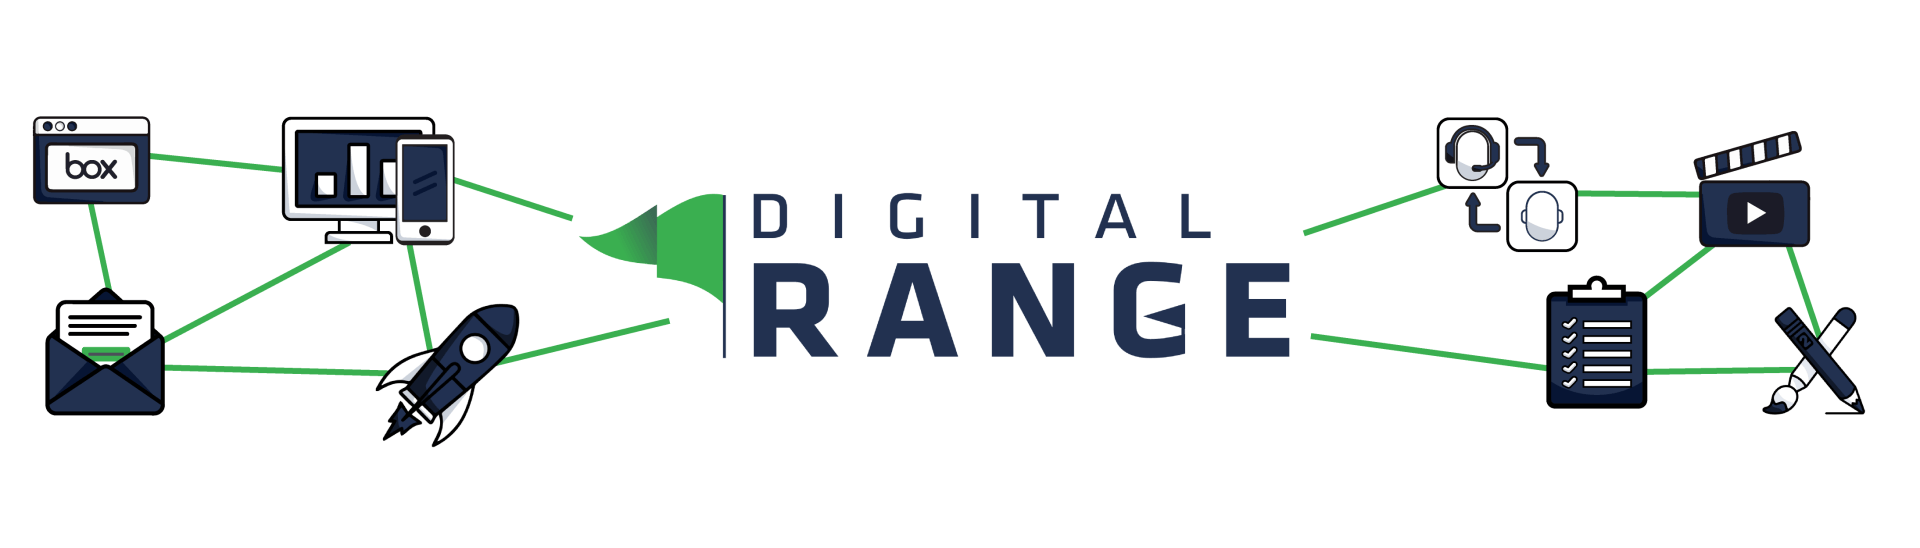 Digital Range - Golf Course Marketing